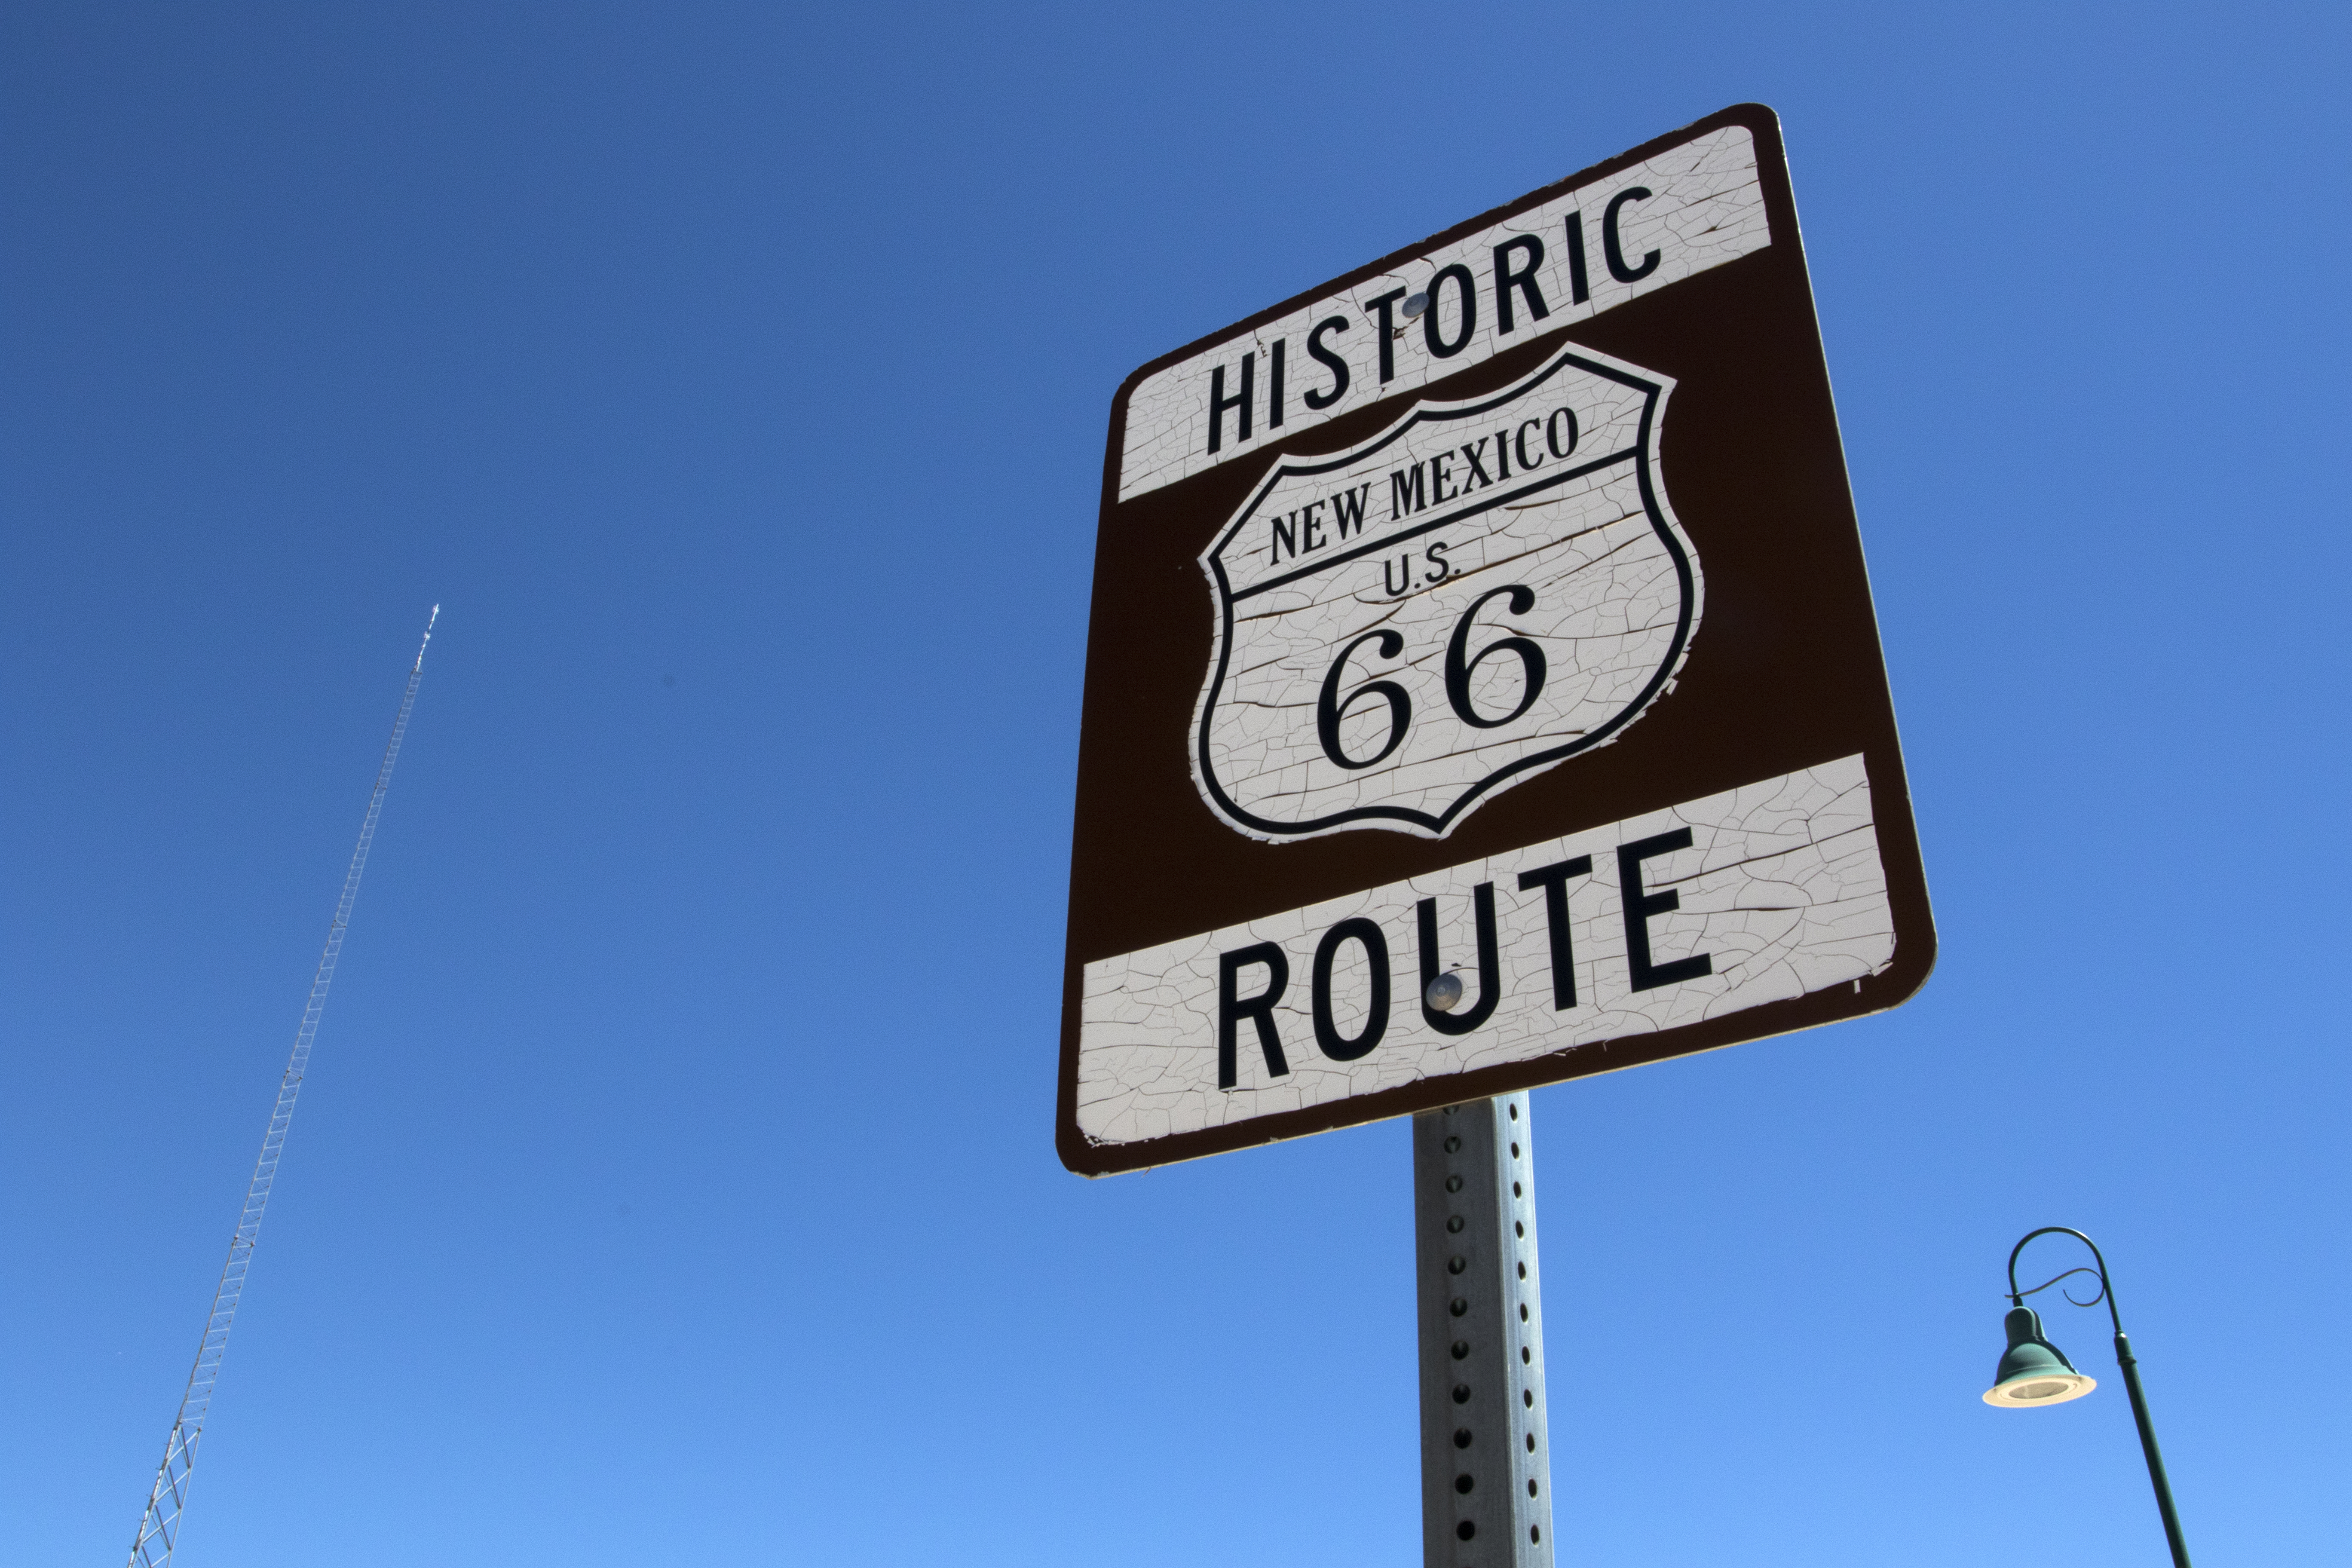 Route 66 Santa Rosa